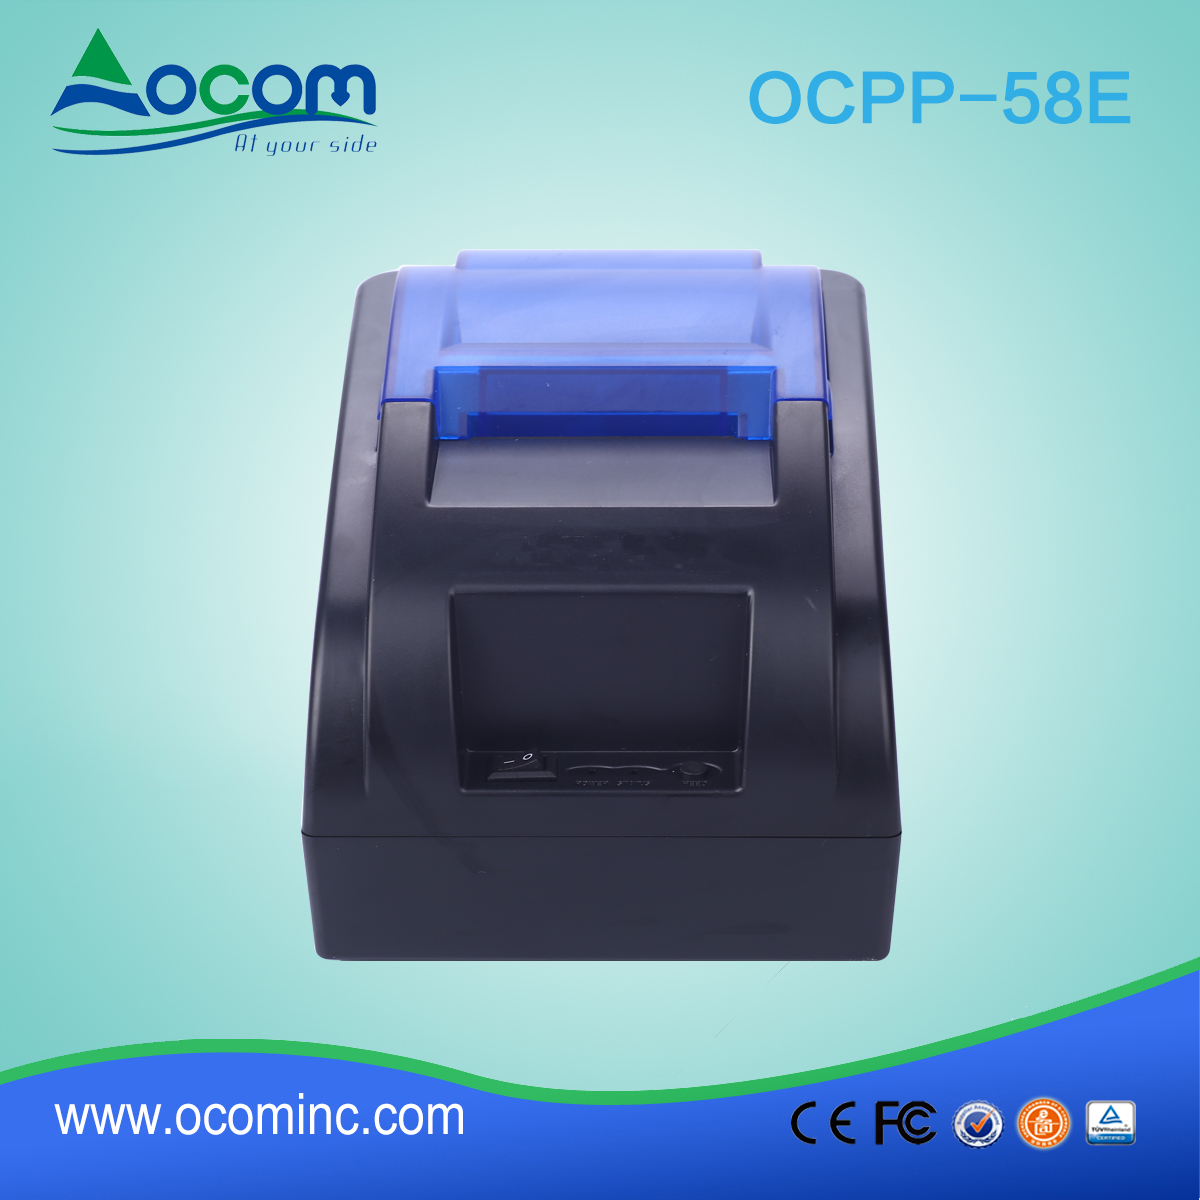 OCPP-58E 58mm热敏收据打印机，内置电源适配器